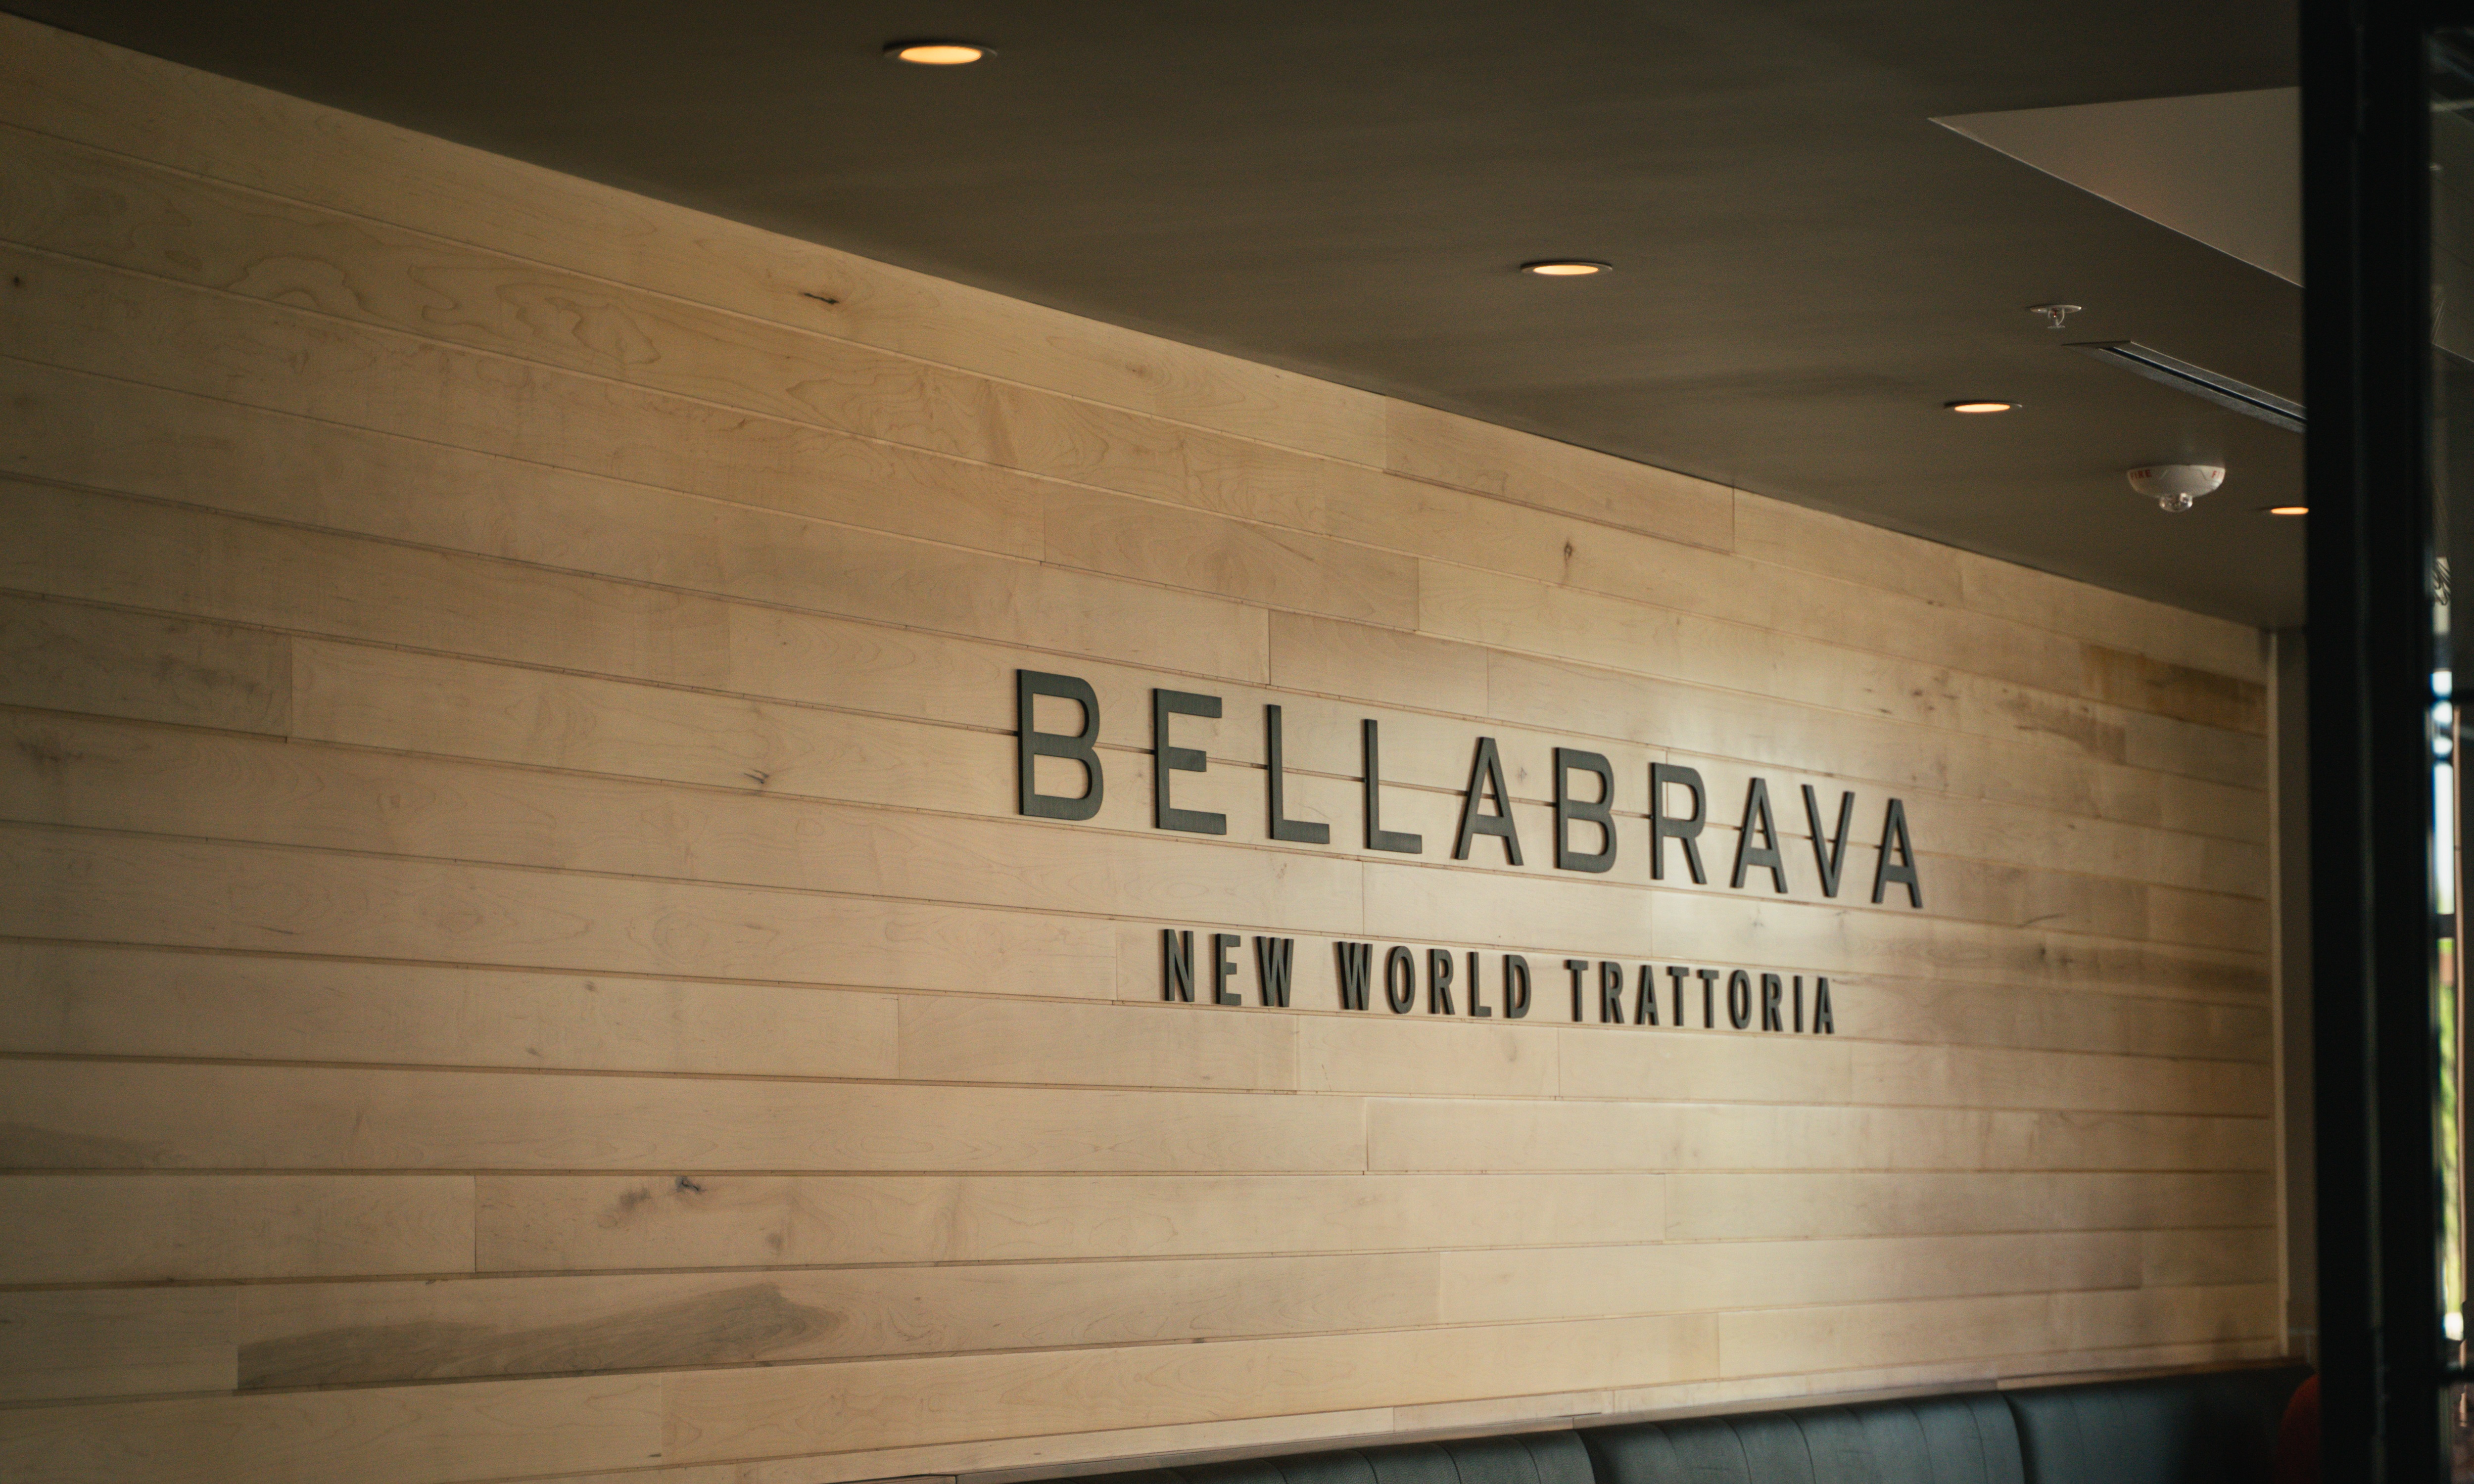 Bellabraa New World Cuisine caption on the wall